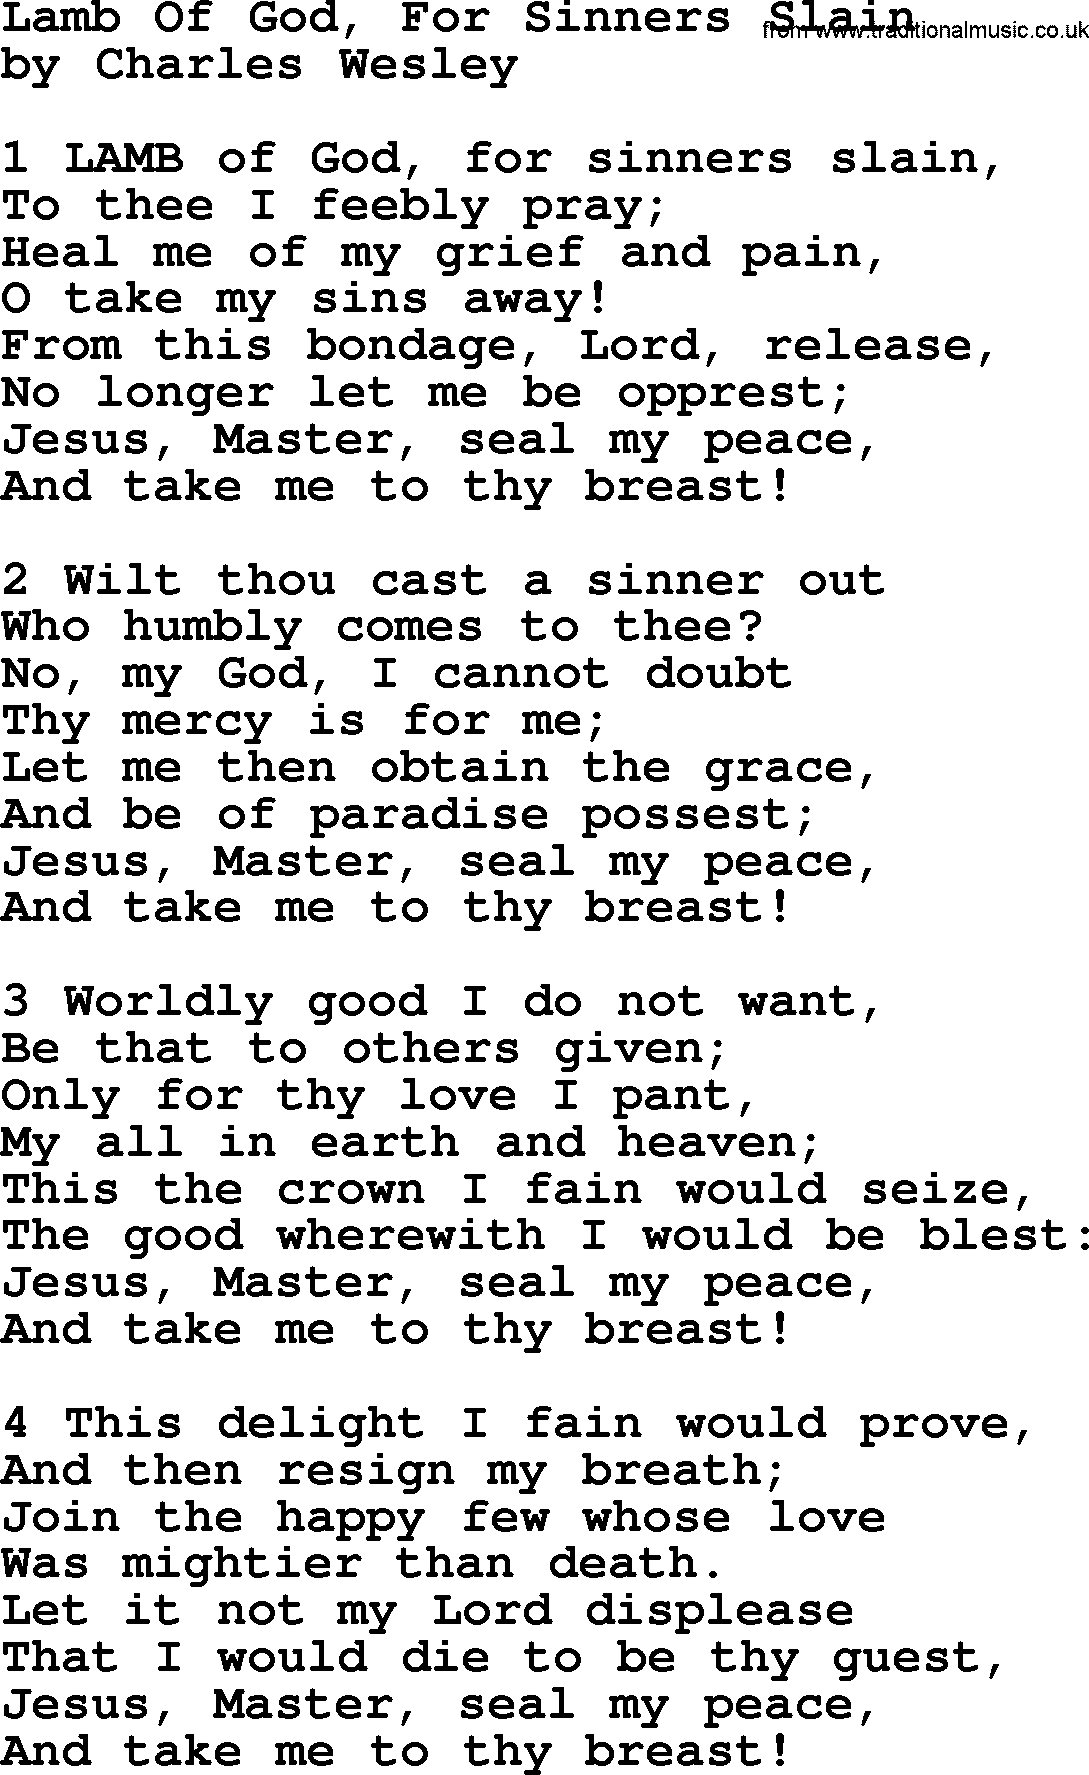 Charles Wesley hymn: Lamb Of God, For Sinners Slain, lyrics